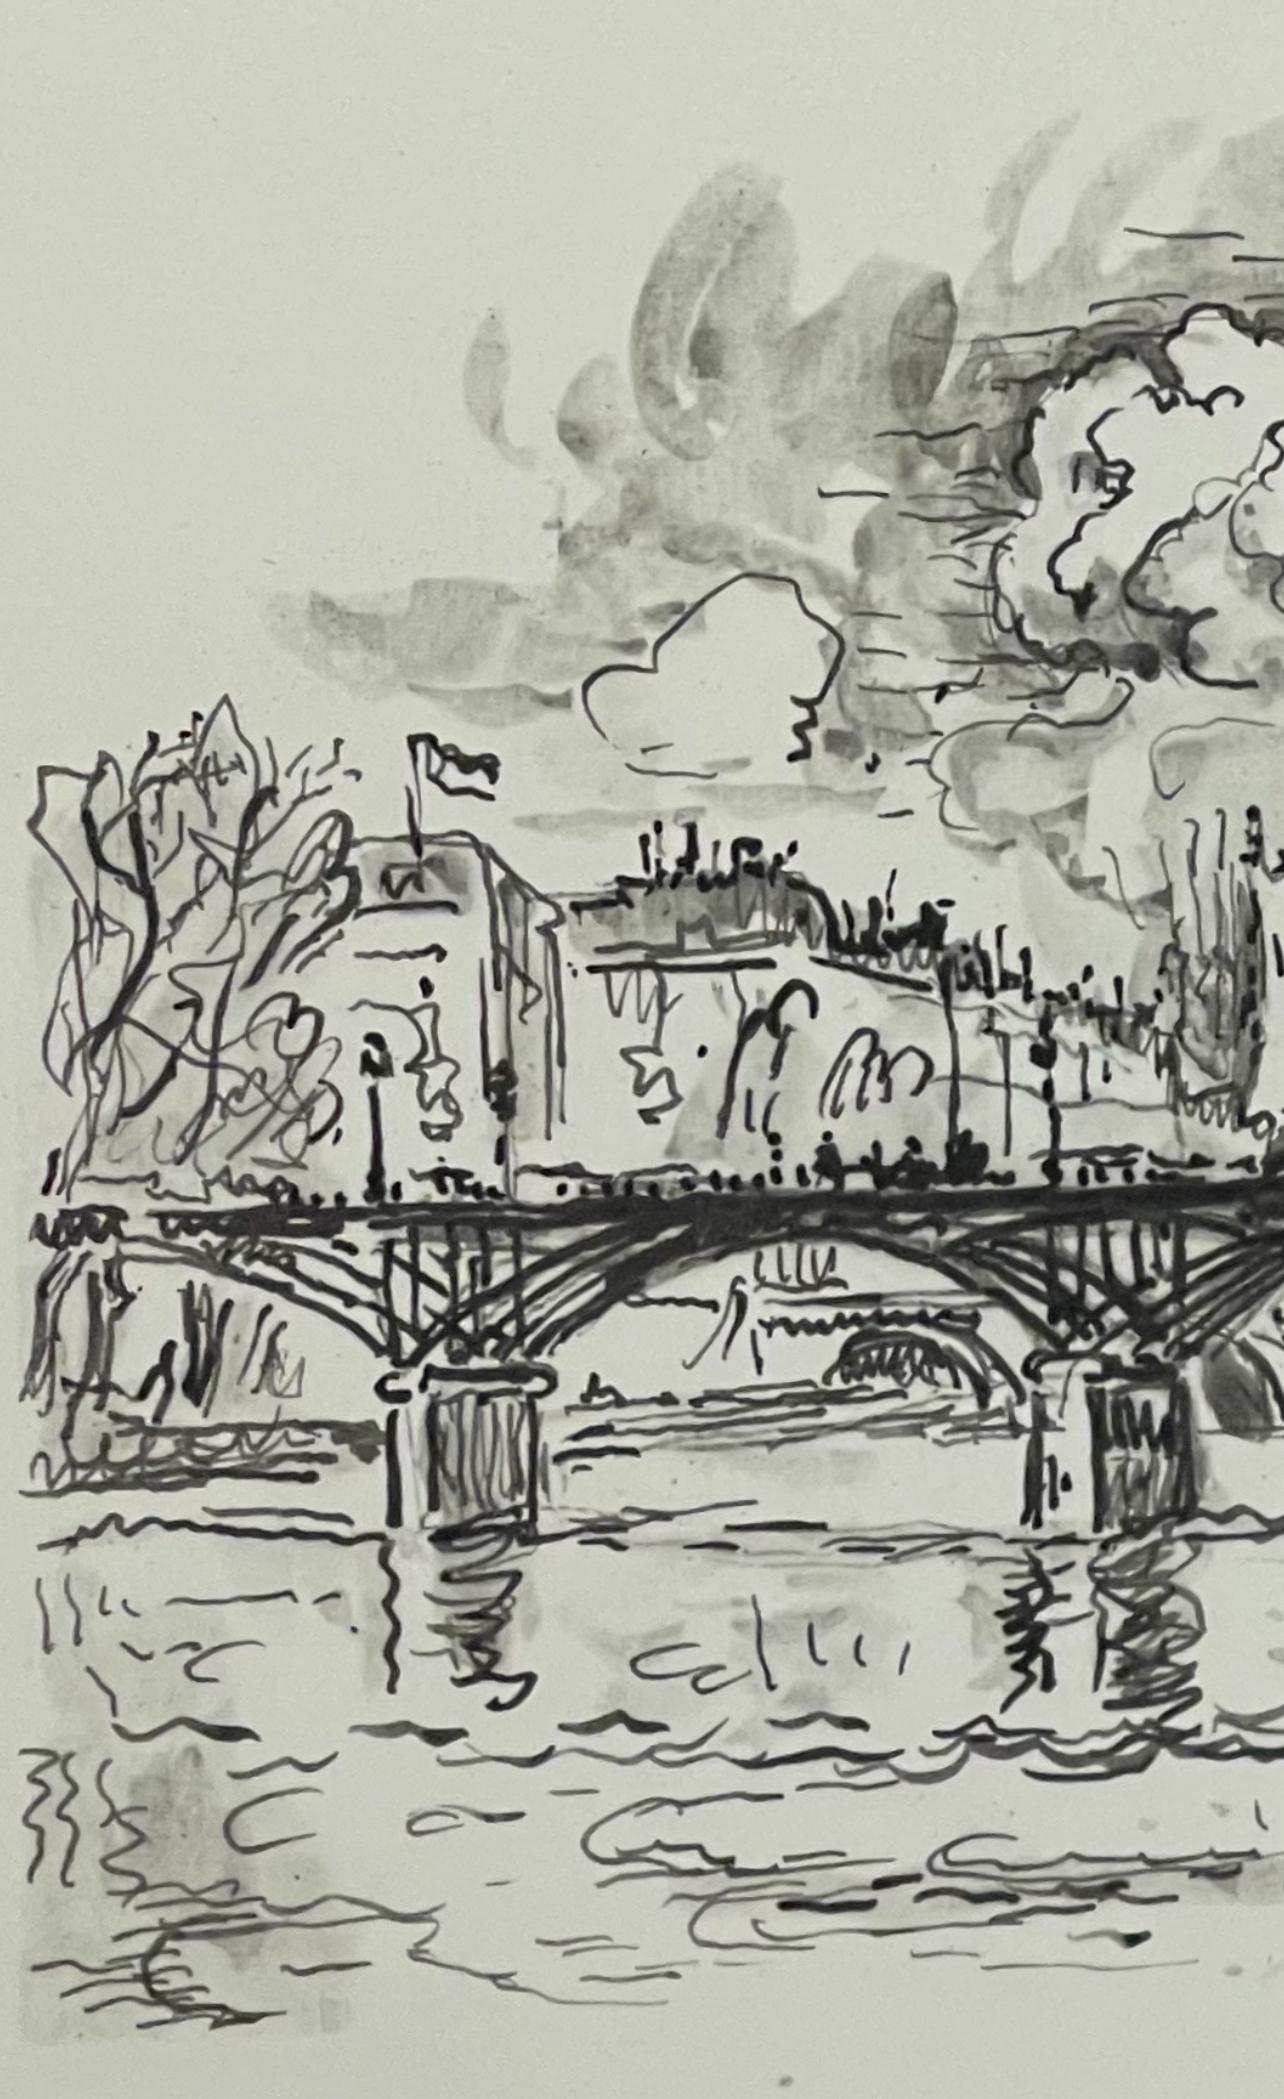 Signac, Pont des Arts, Signac Dessins (after) - Print by Paul Signac